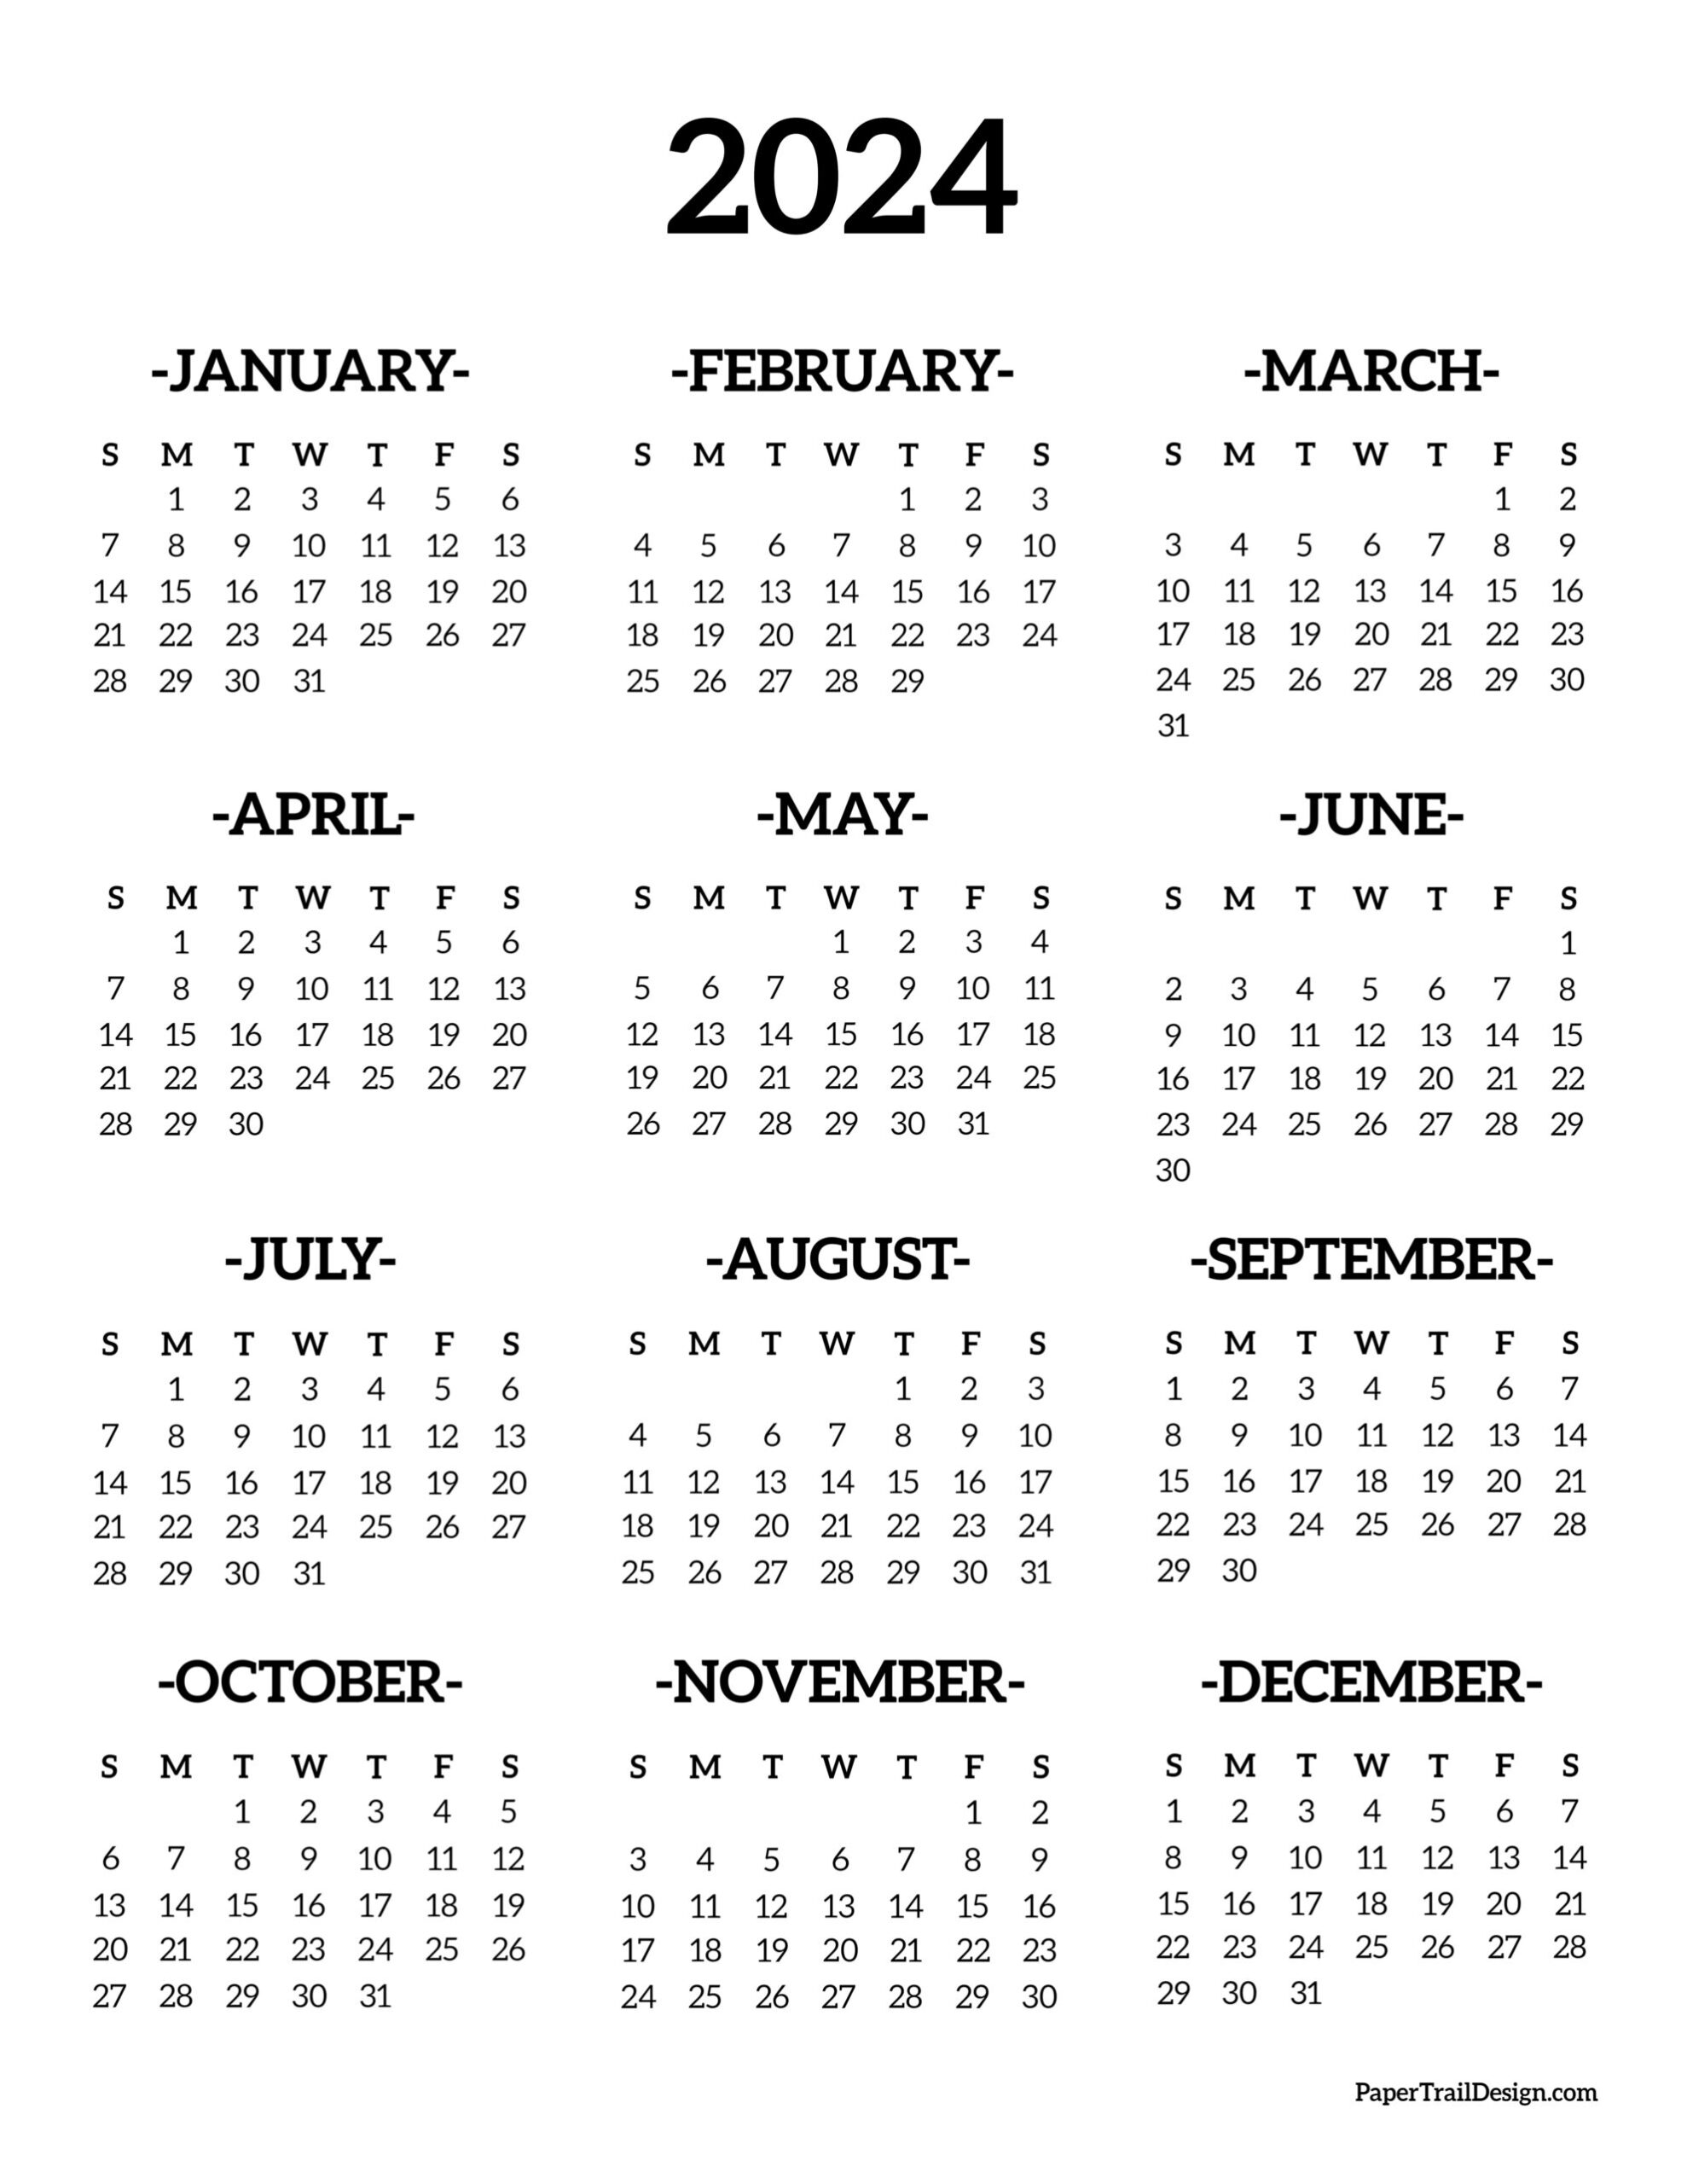 Calendar 2024 Printable One Page - Paper Trail Design for Calendar Free 2024 Printable